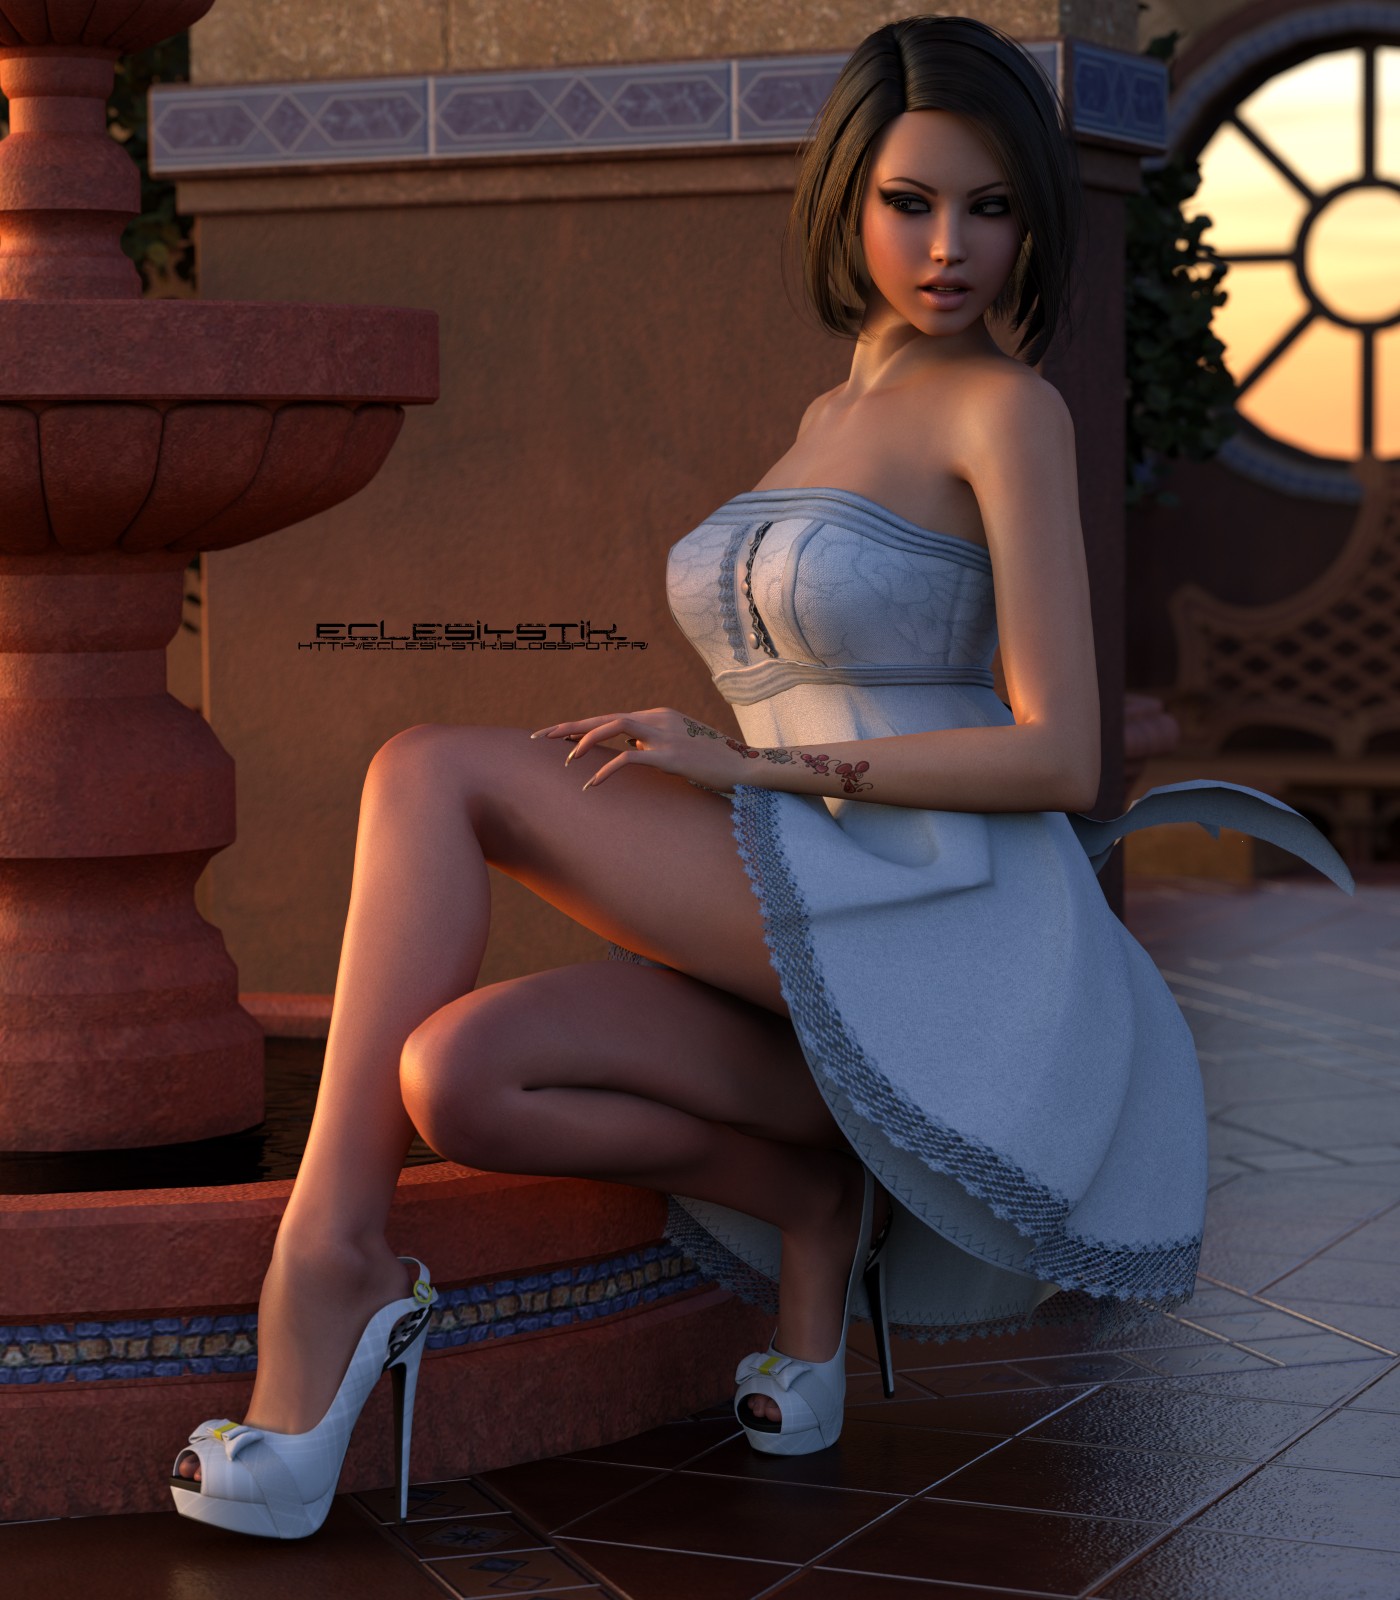 General 1400x1600 boobs heels white heels legs digital art CGI inked girls brunette squatting